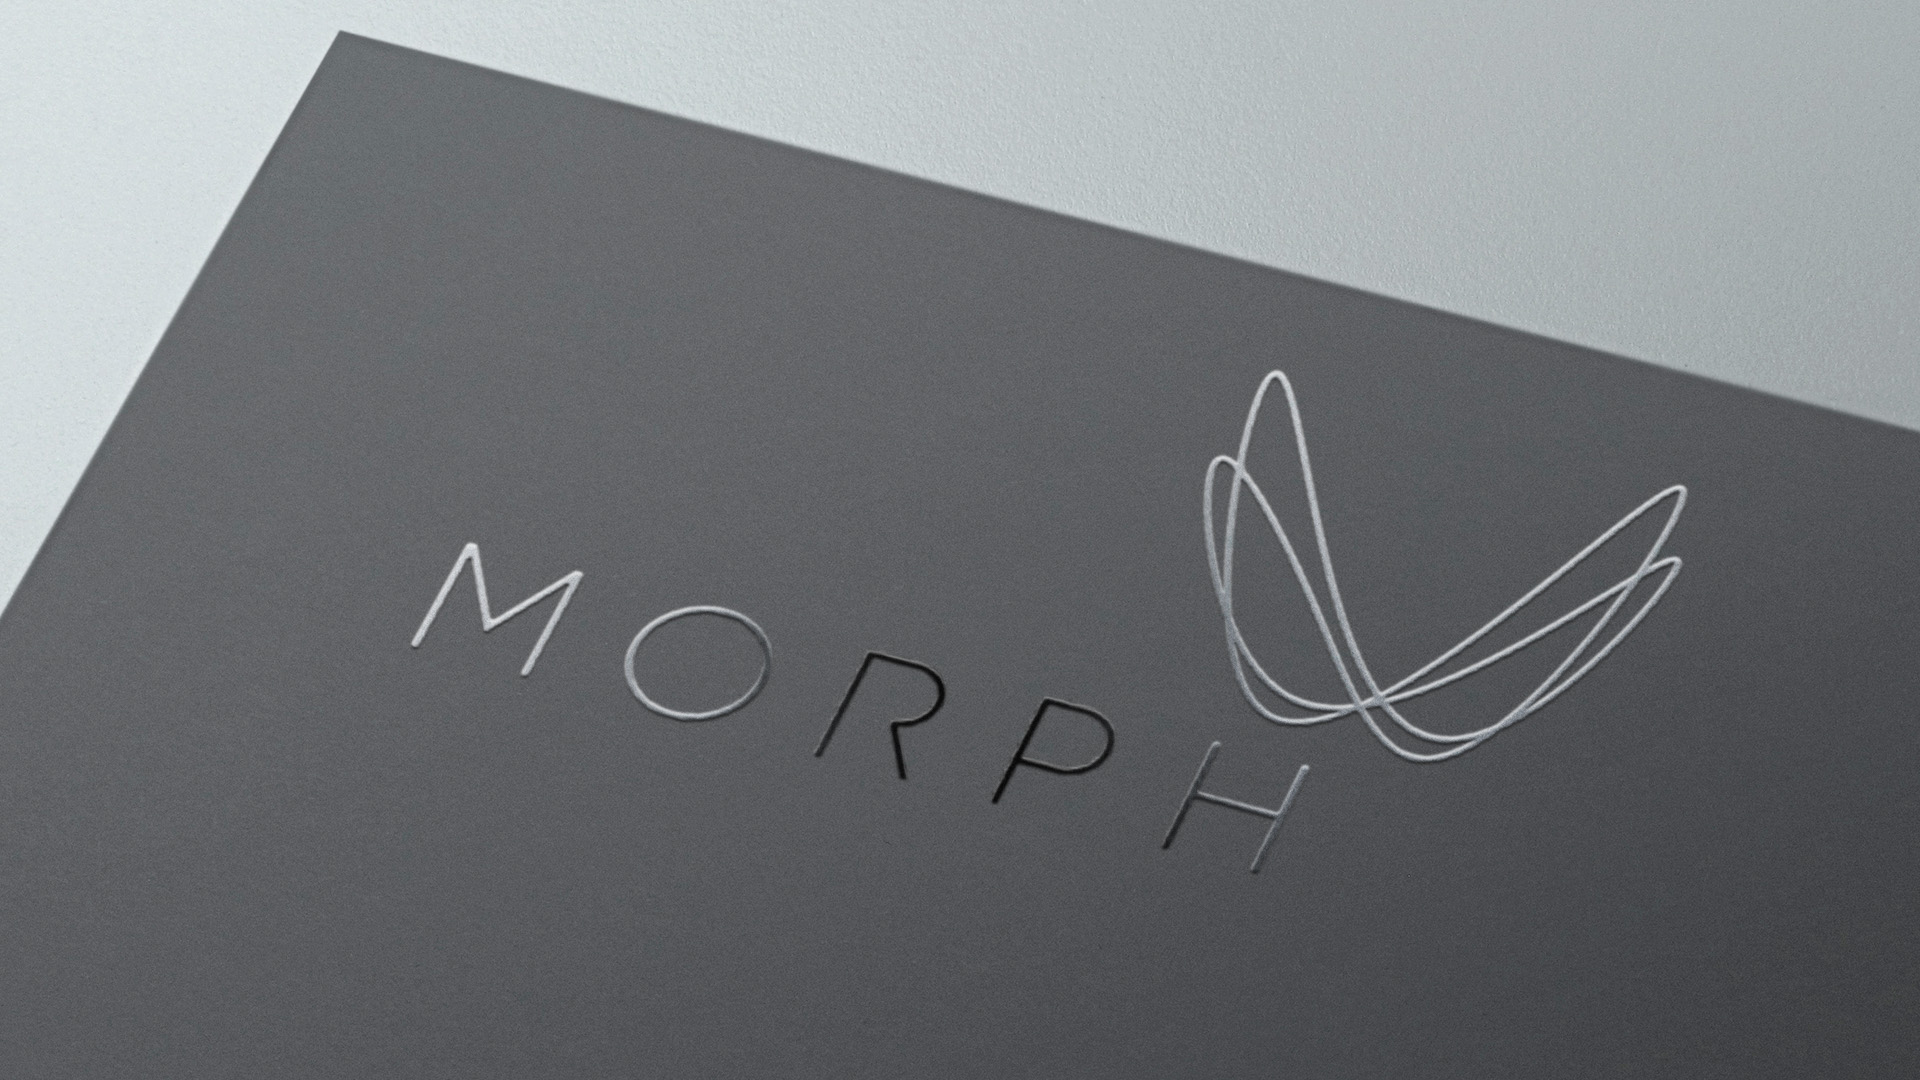 Morph_PPT_P5